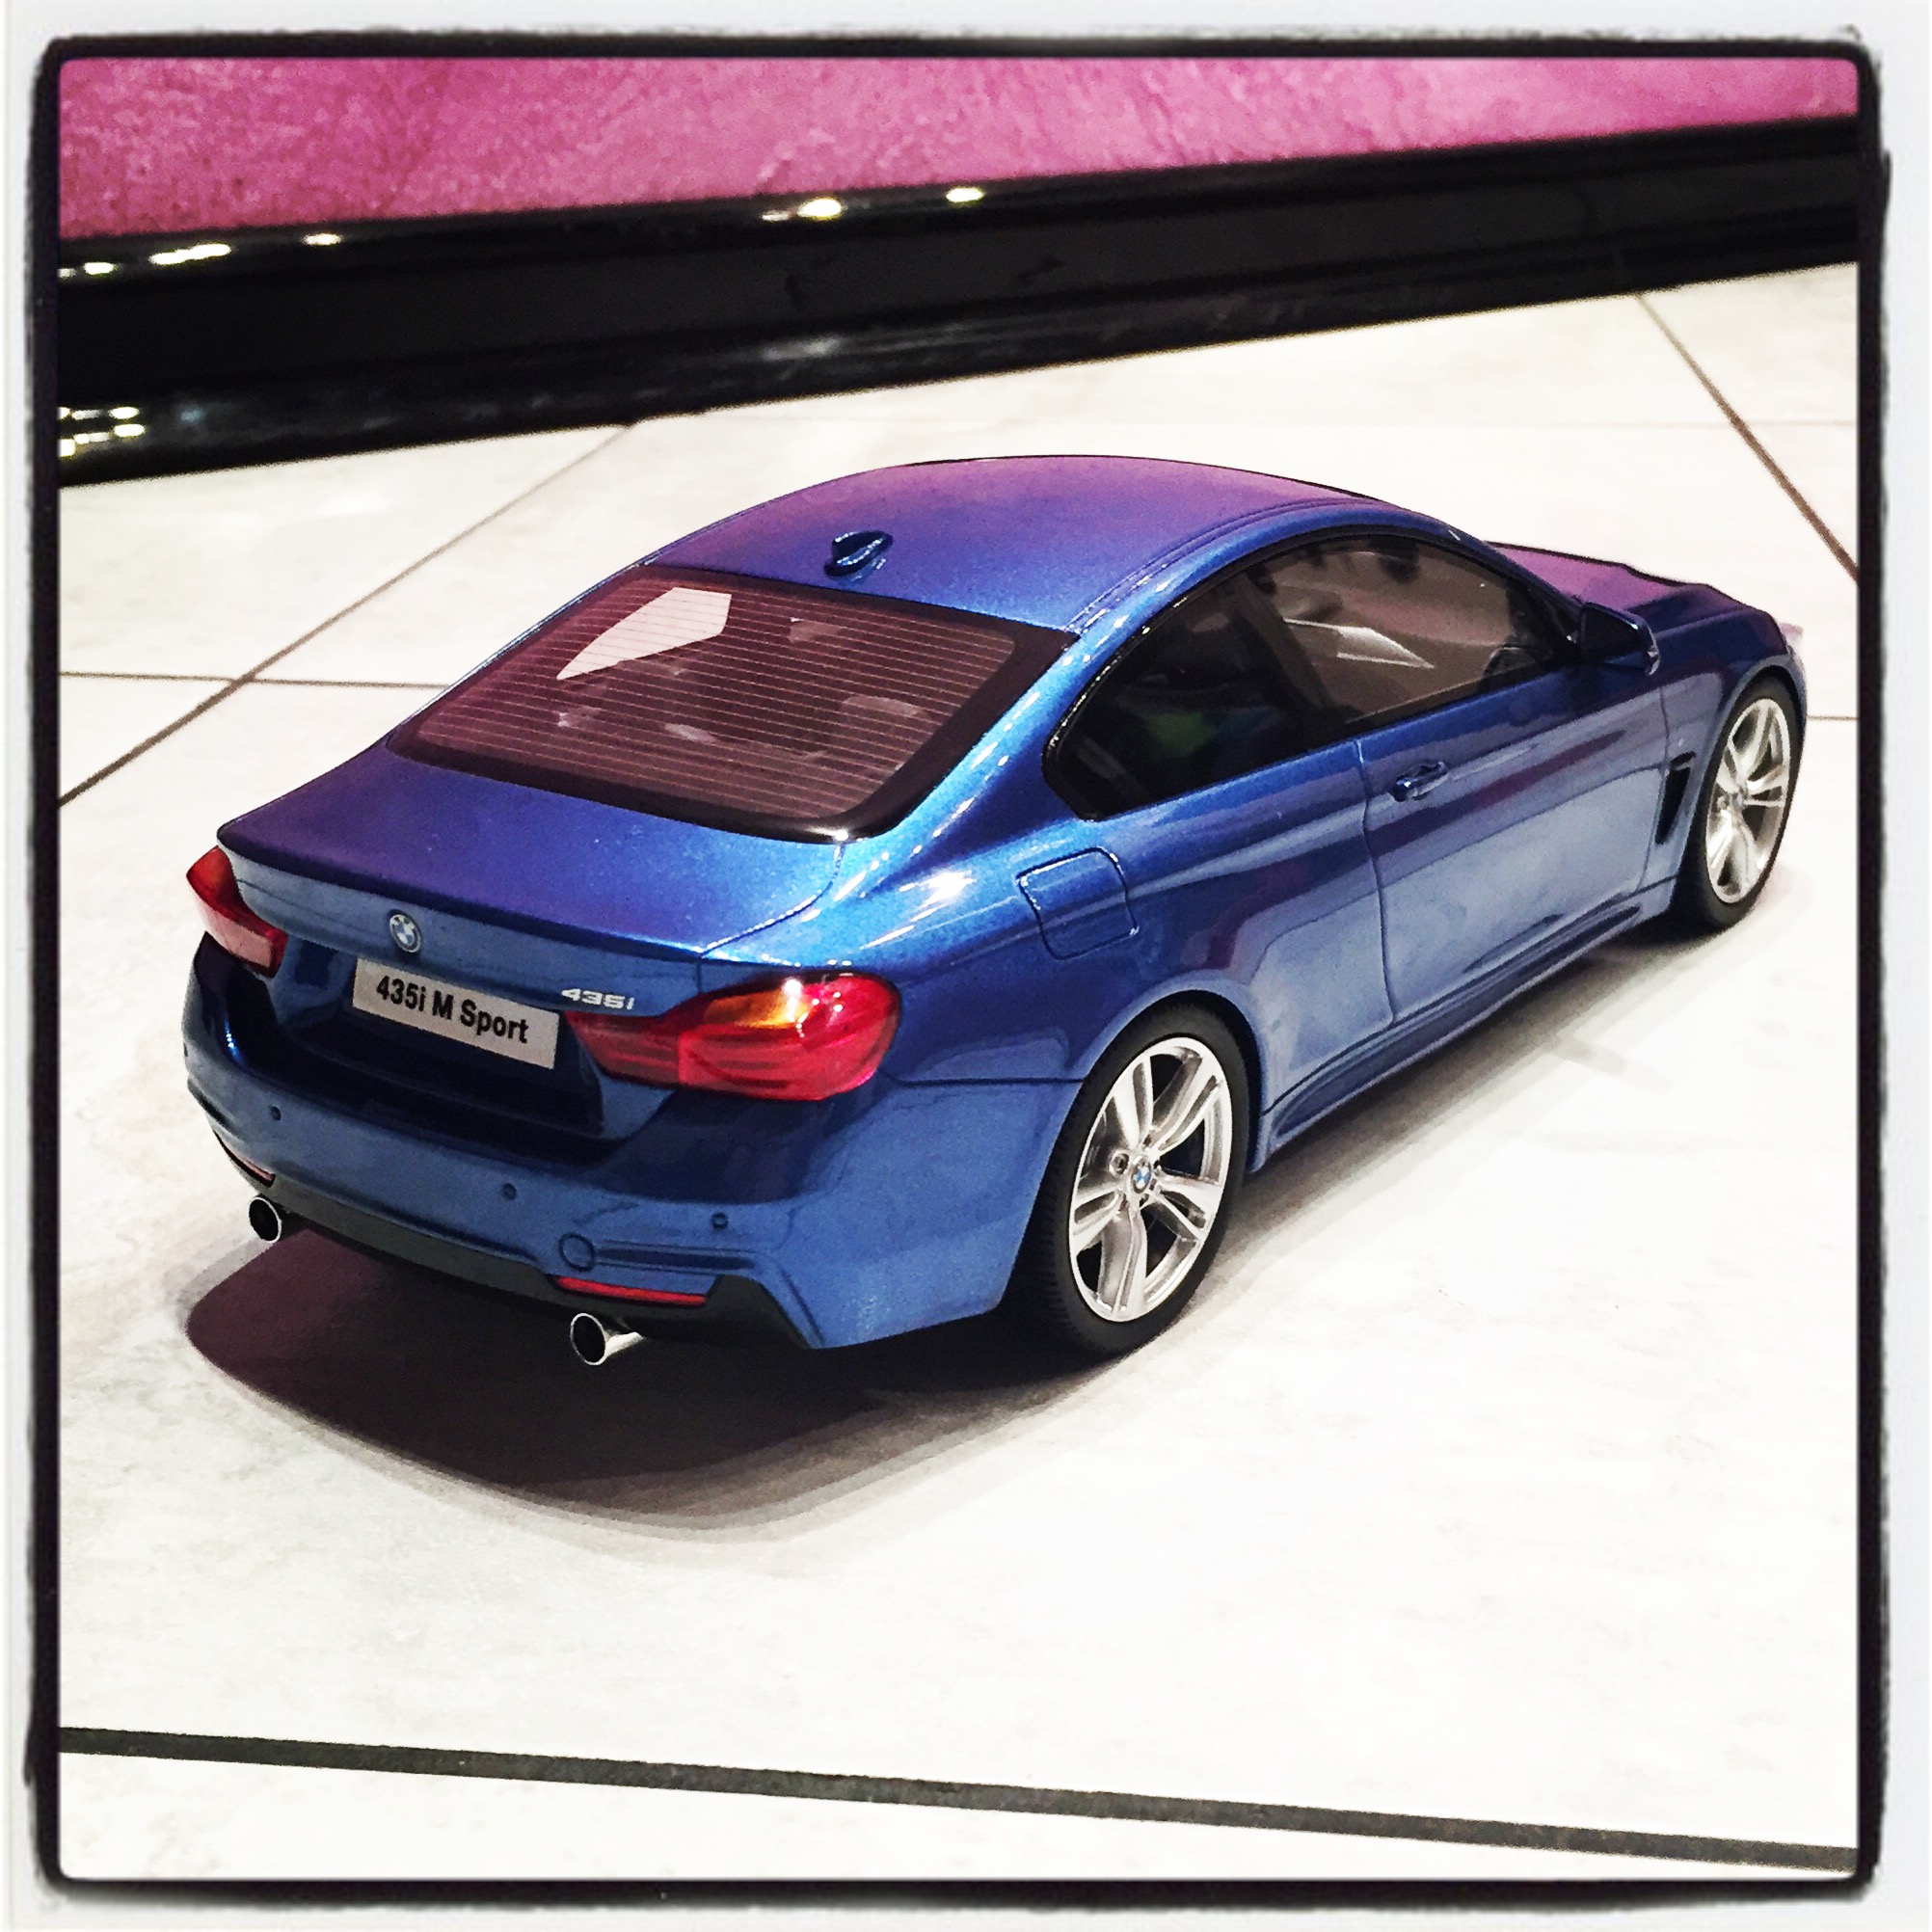 BMW 435i (F32) estoril blue, le 0874 of 1,500pcs. (gt spirit)